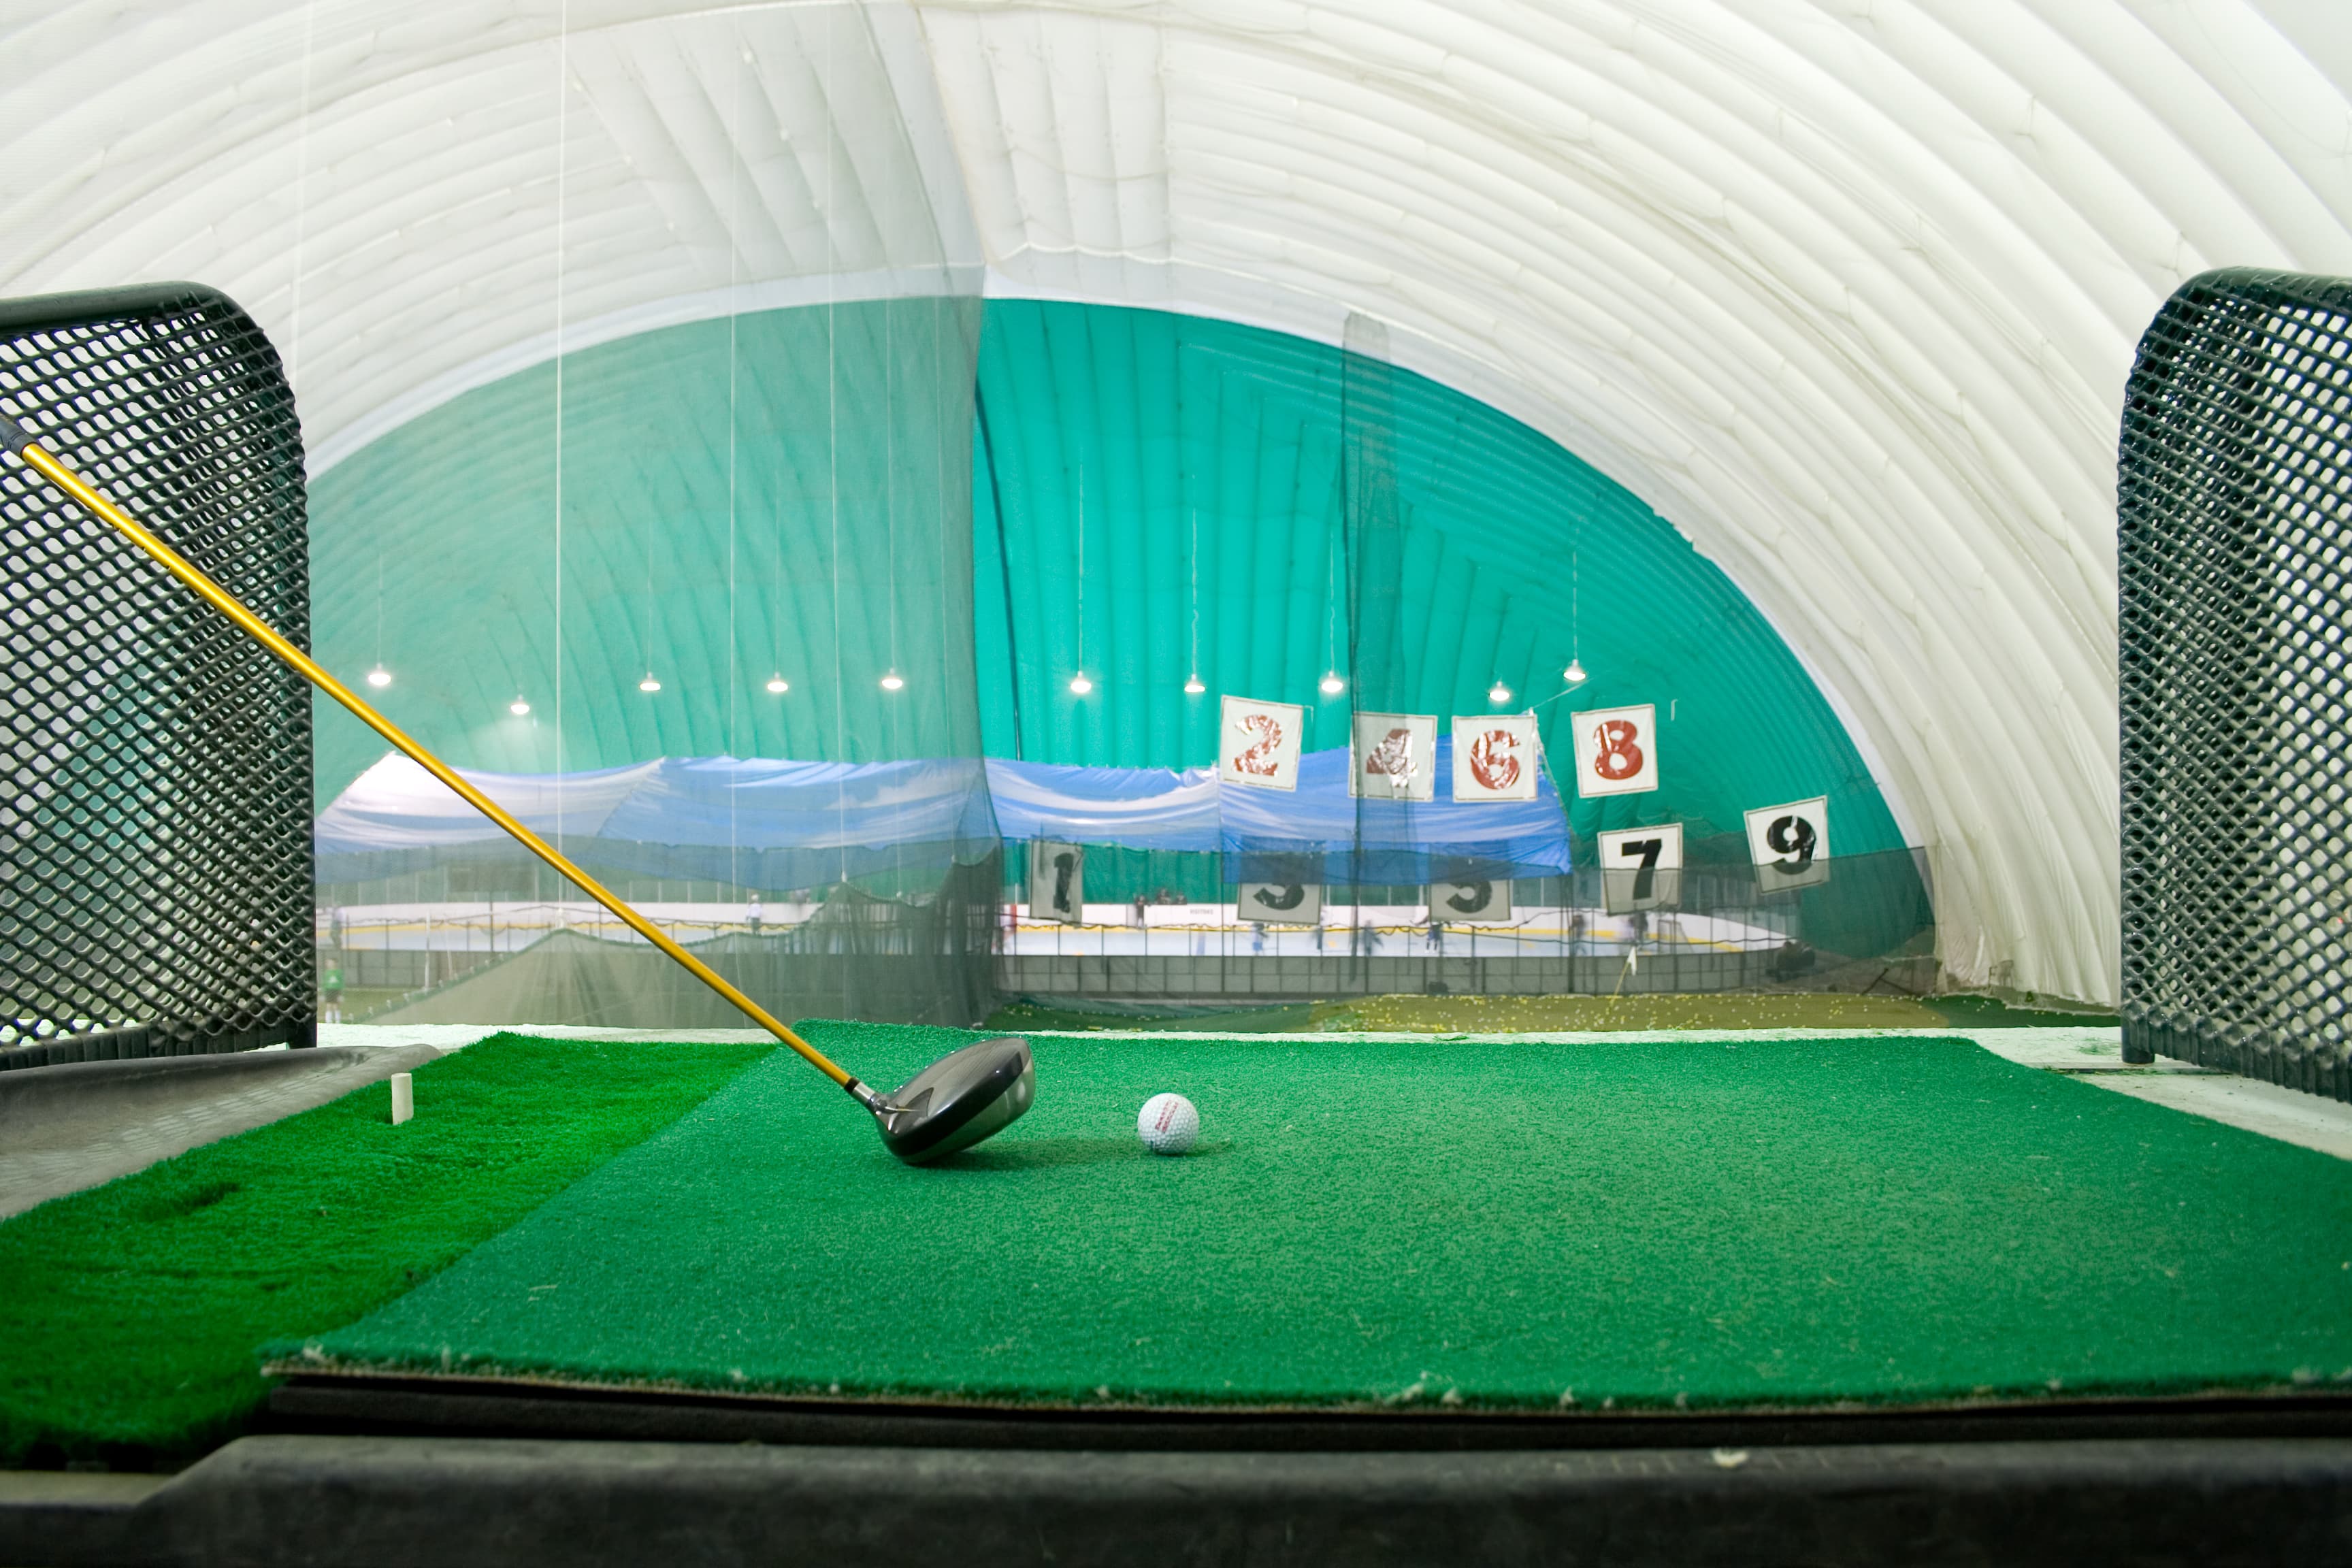 campos de prácticas de golf en interiores o con calefacción